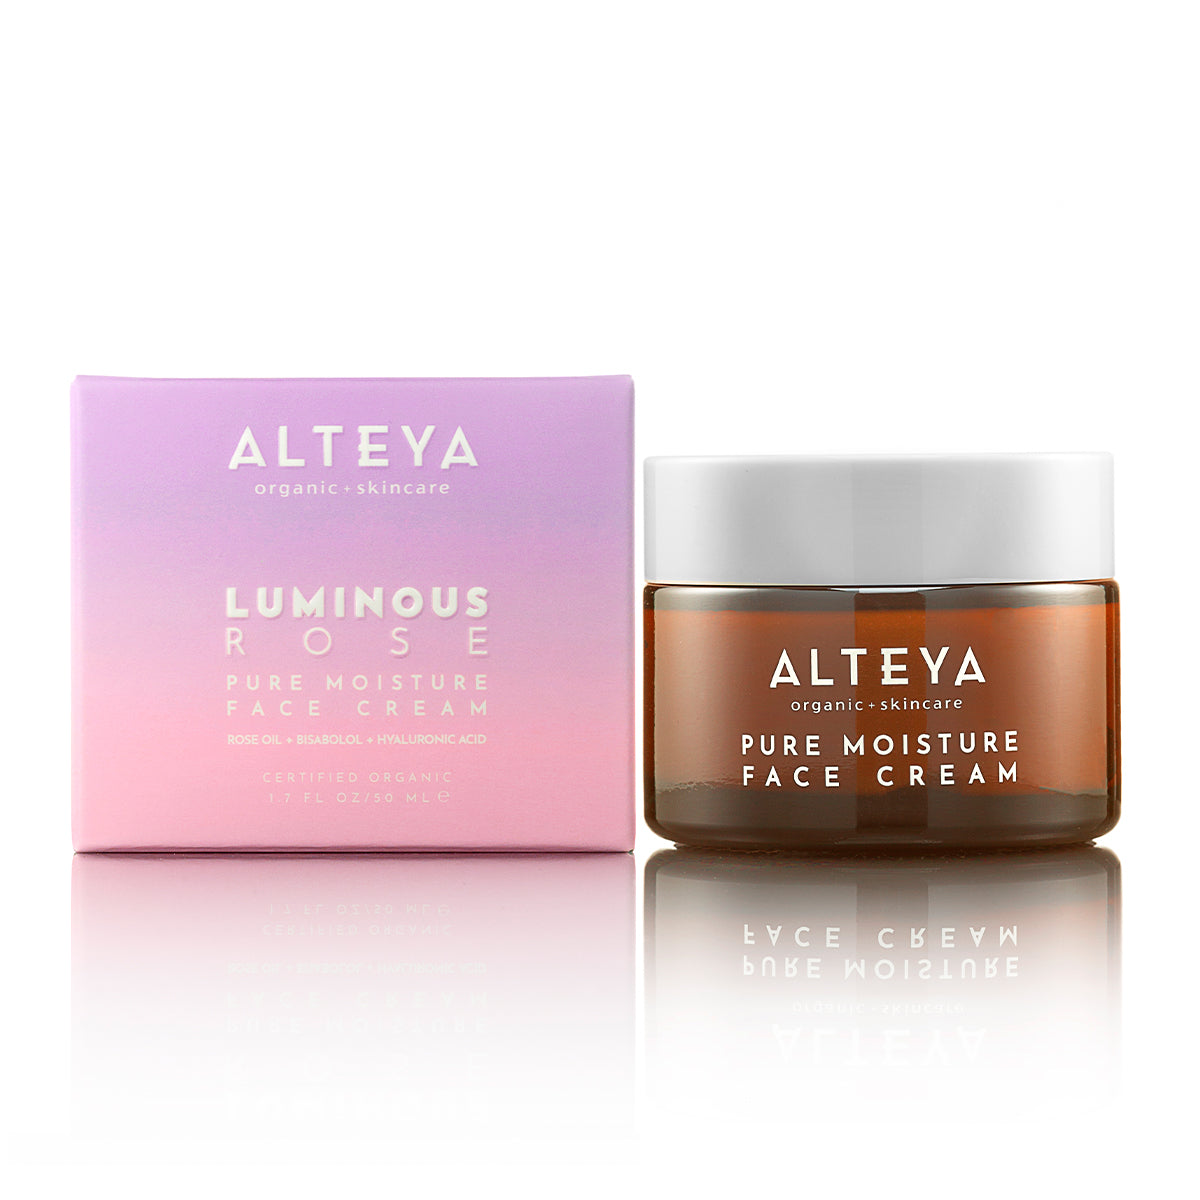 Alteya Organics Pure Moisture Face Cream Luminous Rose is a 50ml moisturizer that enhances elasticity and provides optimal hydration to the skin.